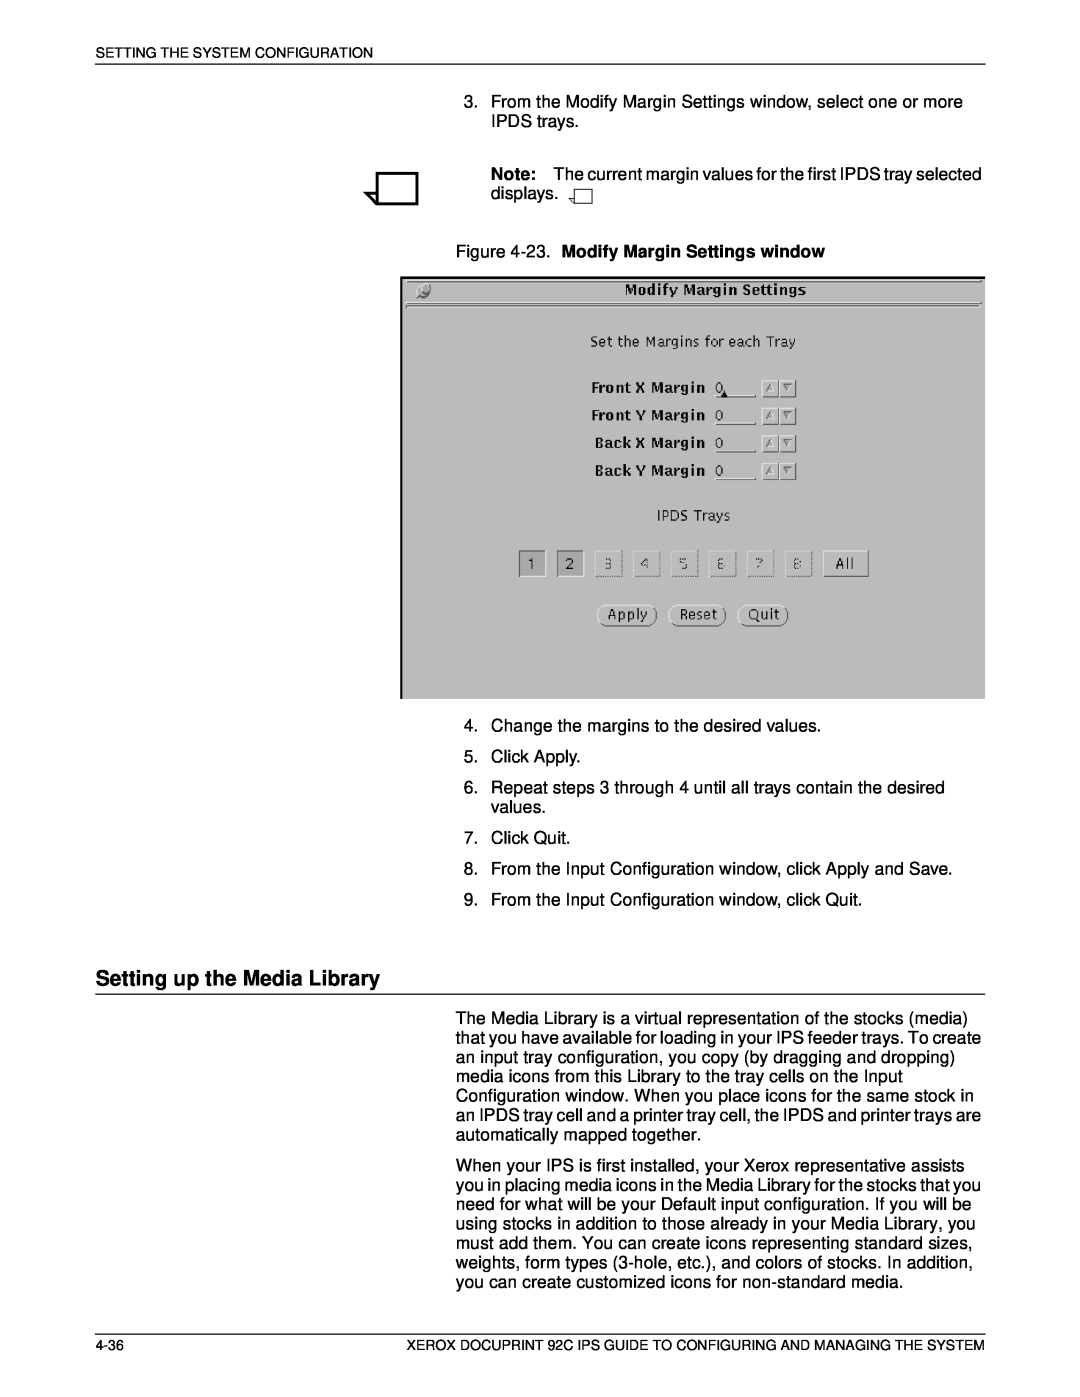 Xerox 92C IPS manual Setting up the Media Library, 23. Modify Margin Settings window 